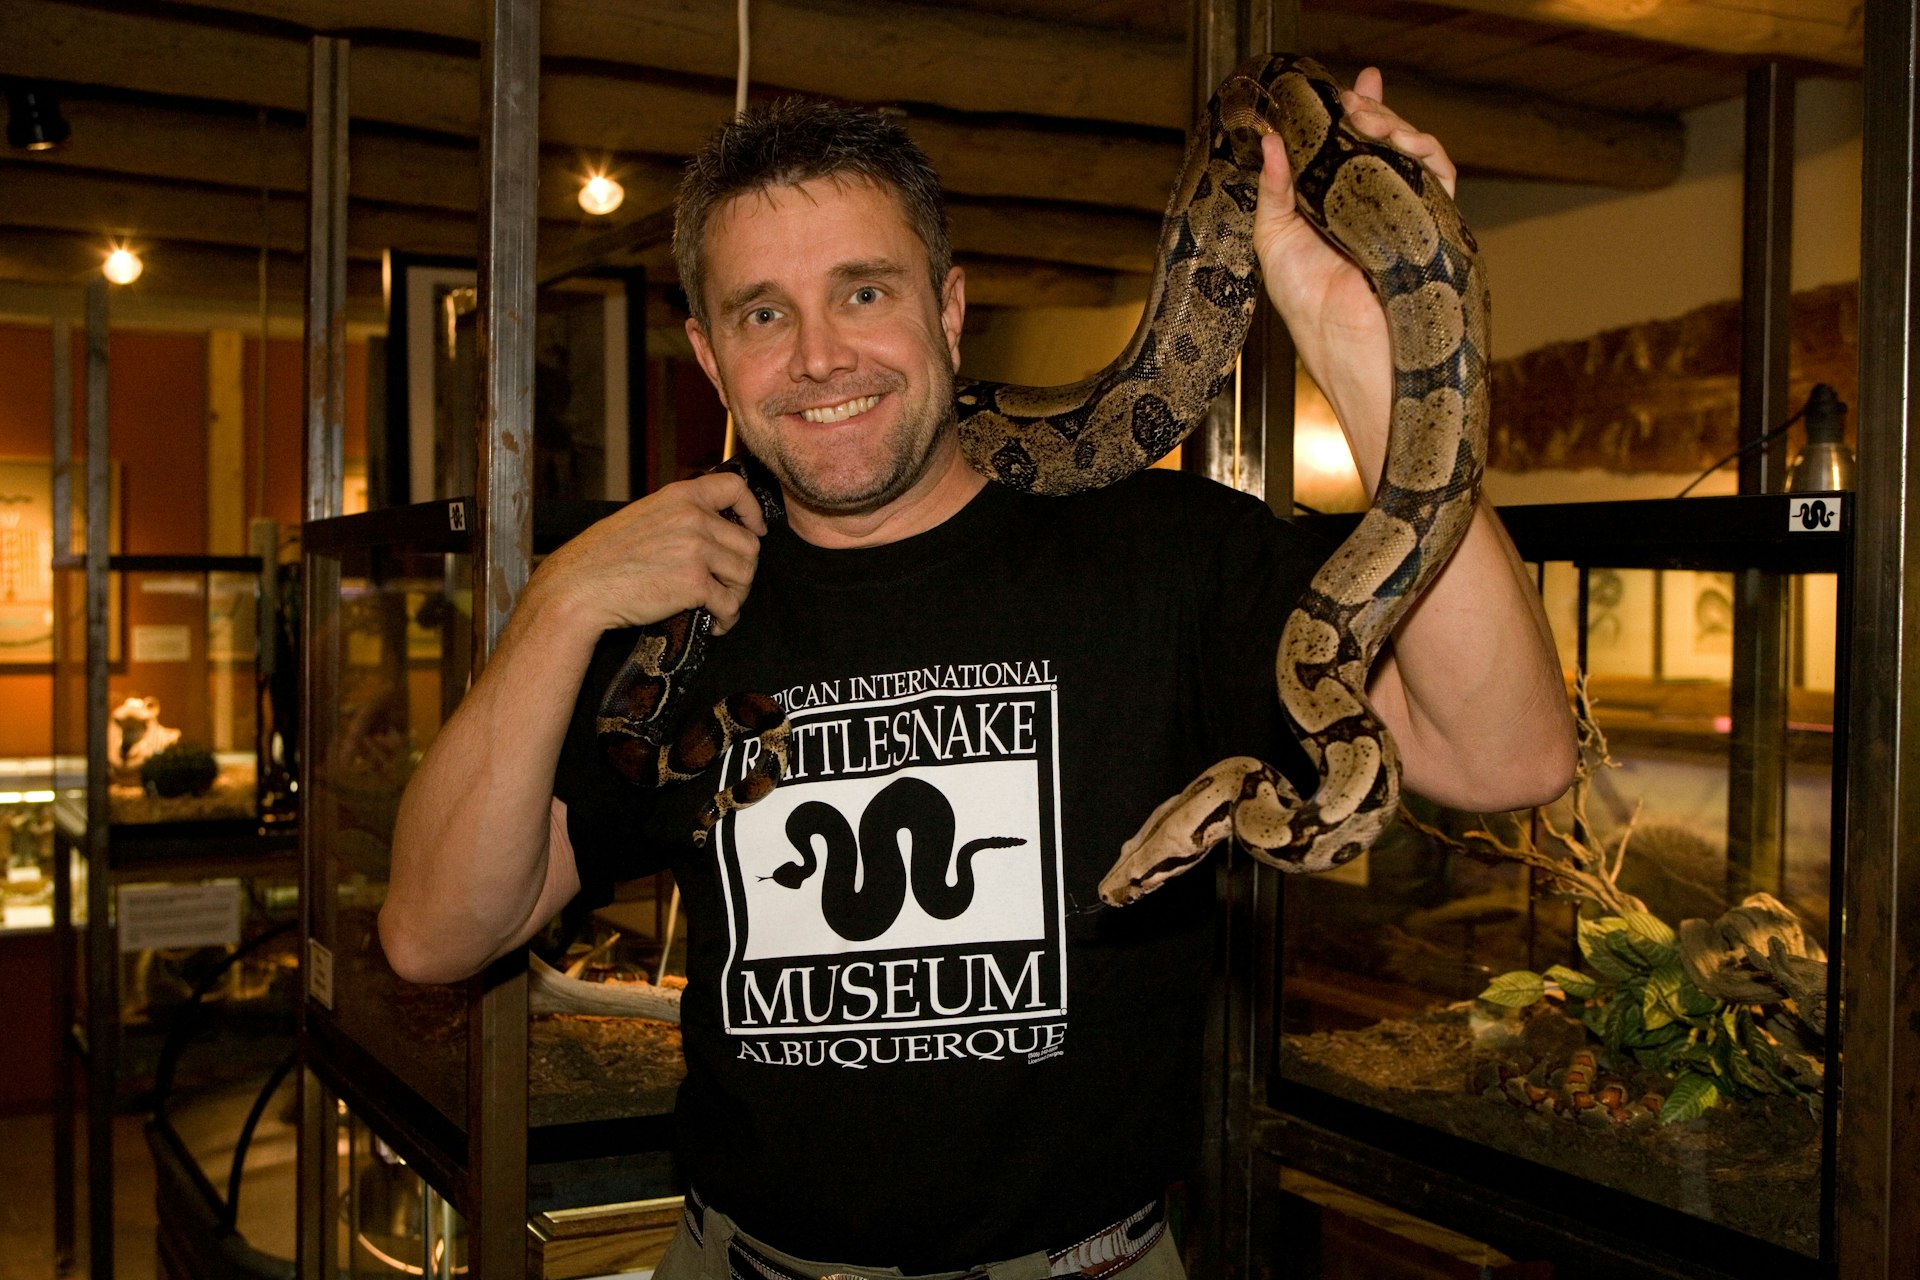 Albuquerque: American International Rattlesnake Museum